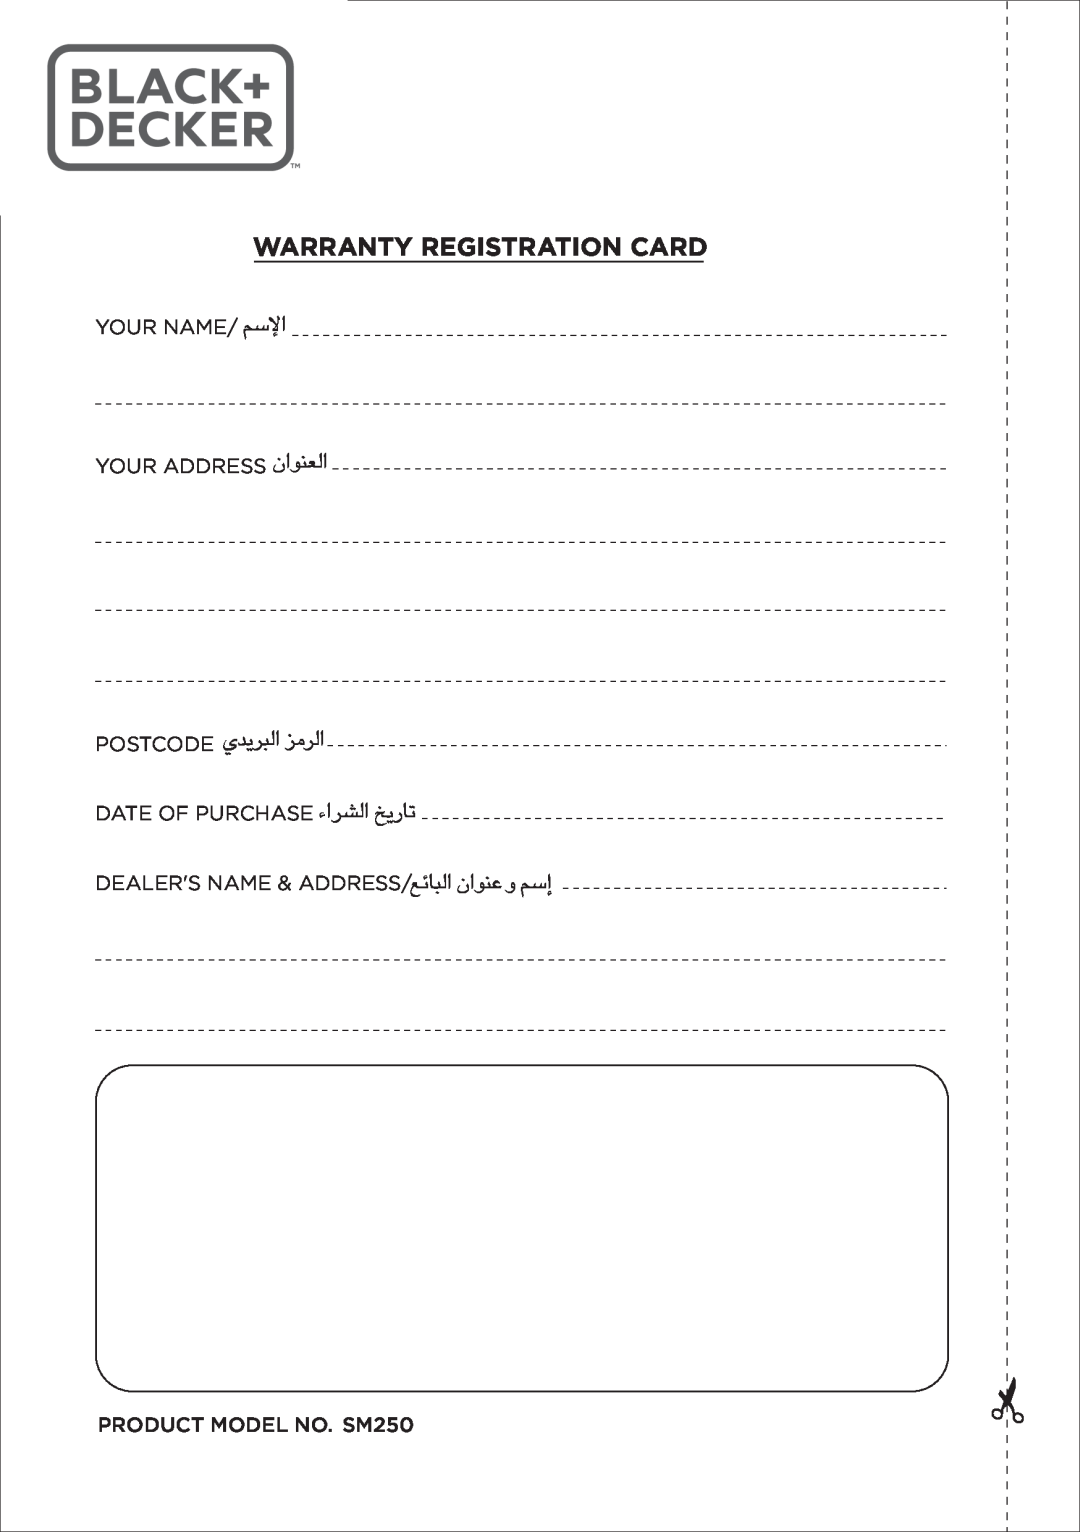 Black & Decker SM250 manual Warranty Registration Card, «ùßr, «∞FMu«Ê, «∞∂d¥bÍ «∞d±e, «∞Ad«¡ ¢U¸¥a, «∞∂Uzl ´Mu«Ê Ë ≈ßr 